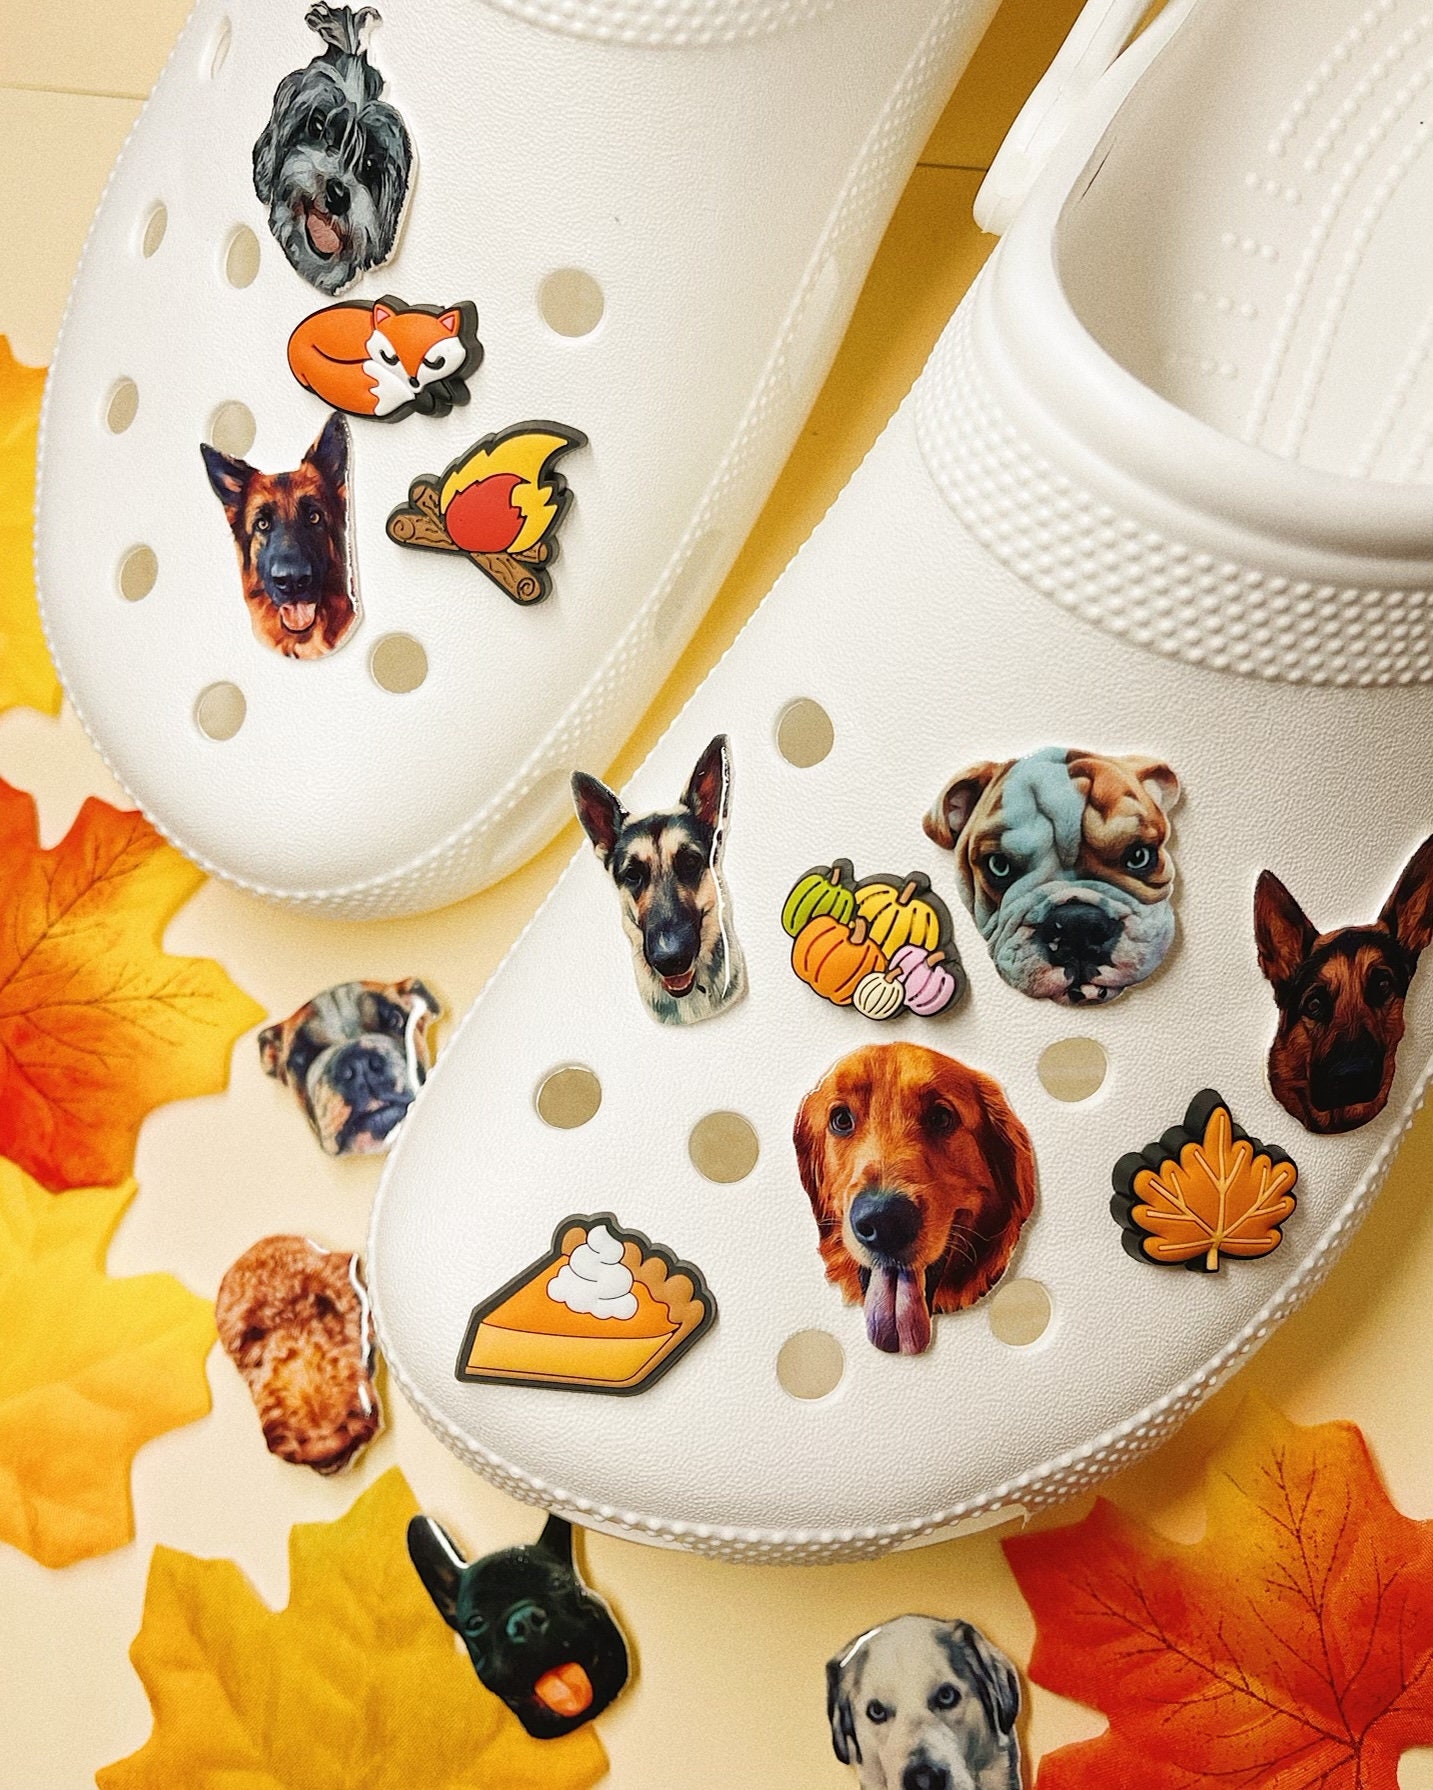 Crocs Charms Pomeranian, Teddy Shoe Decorations